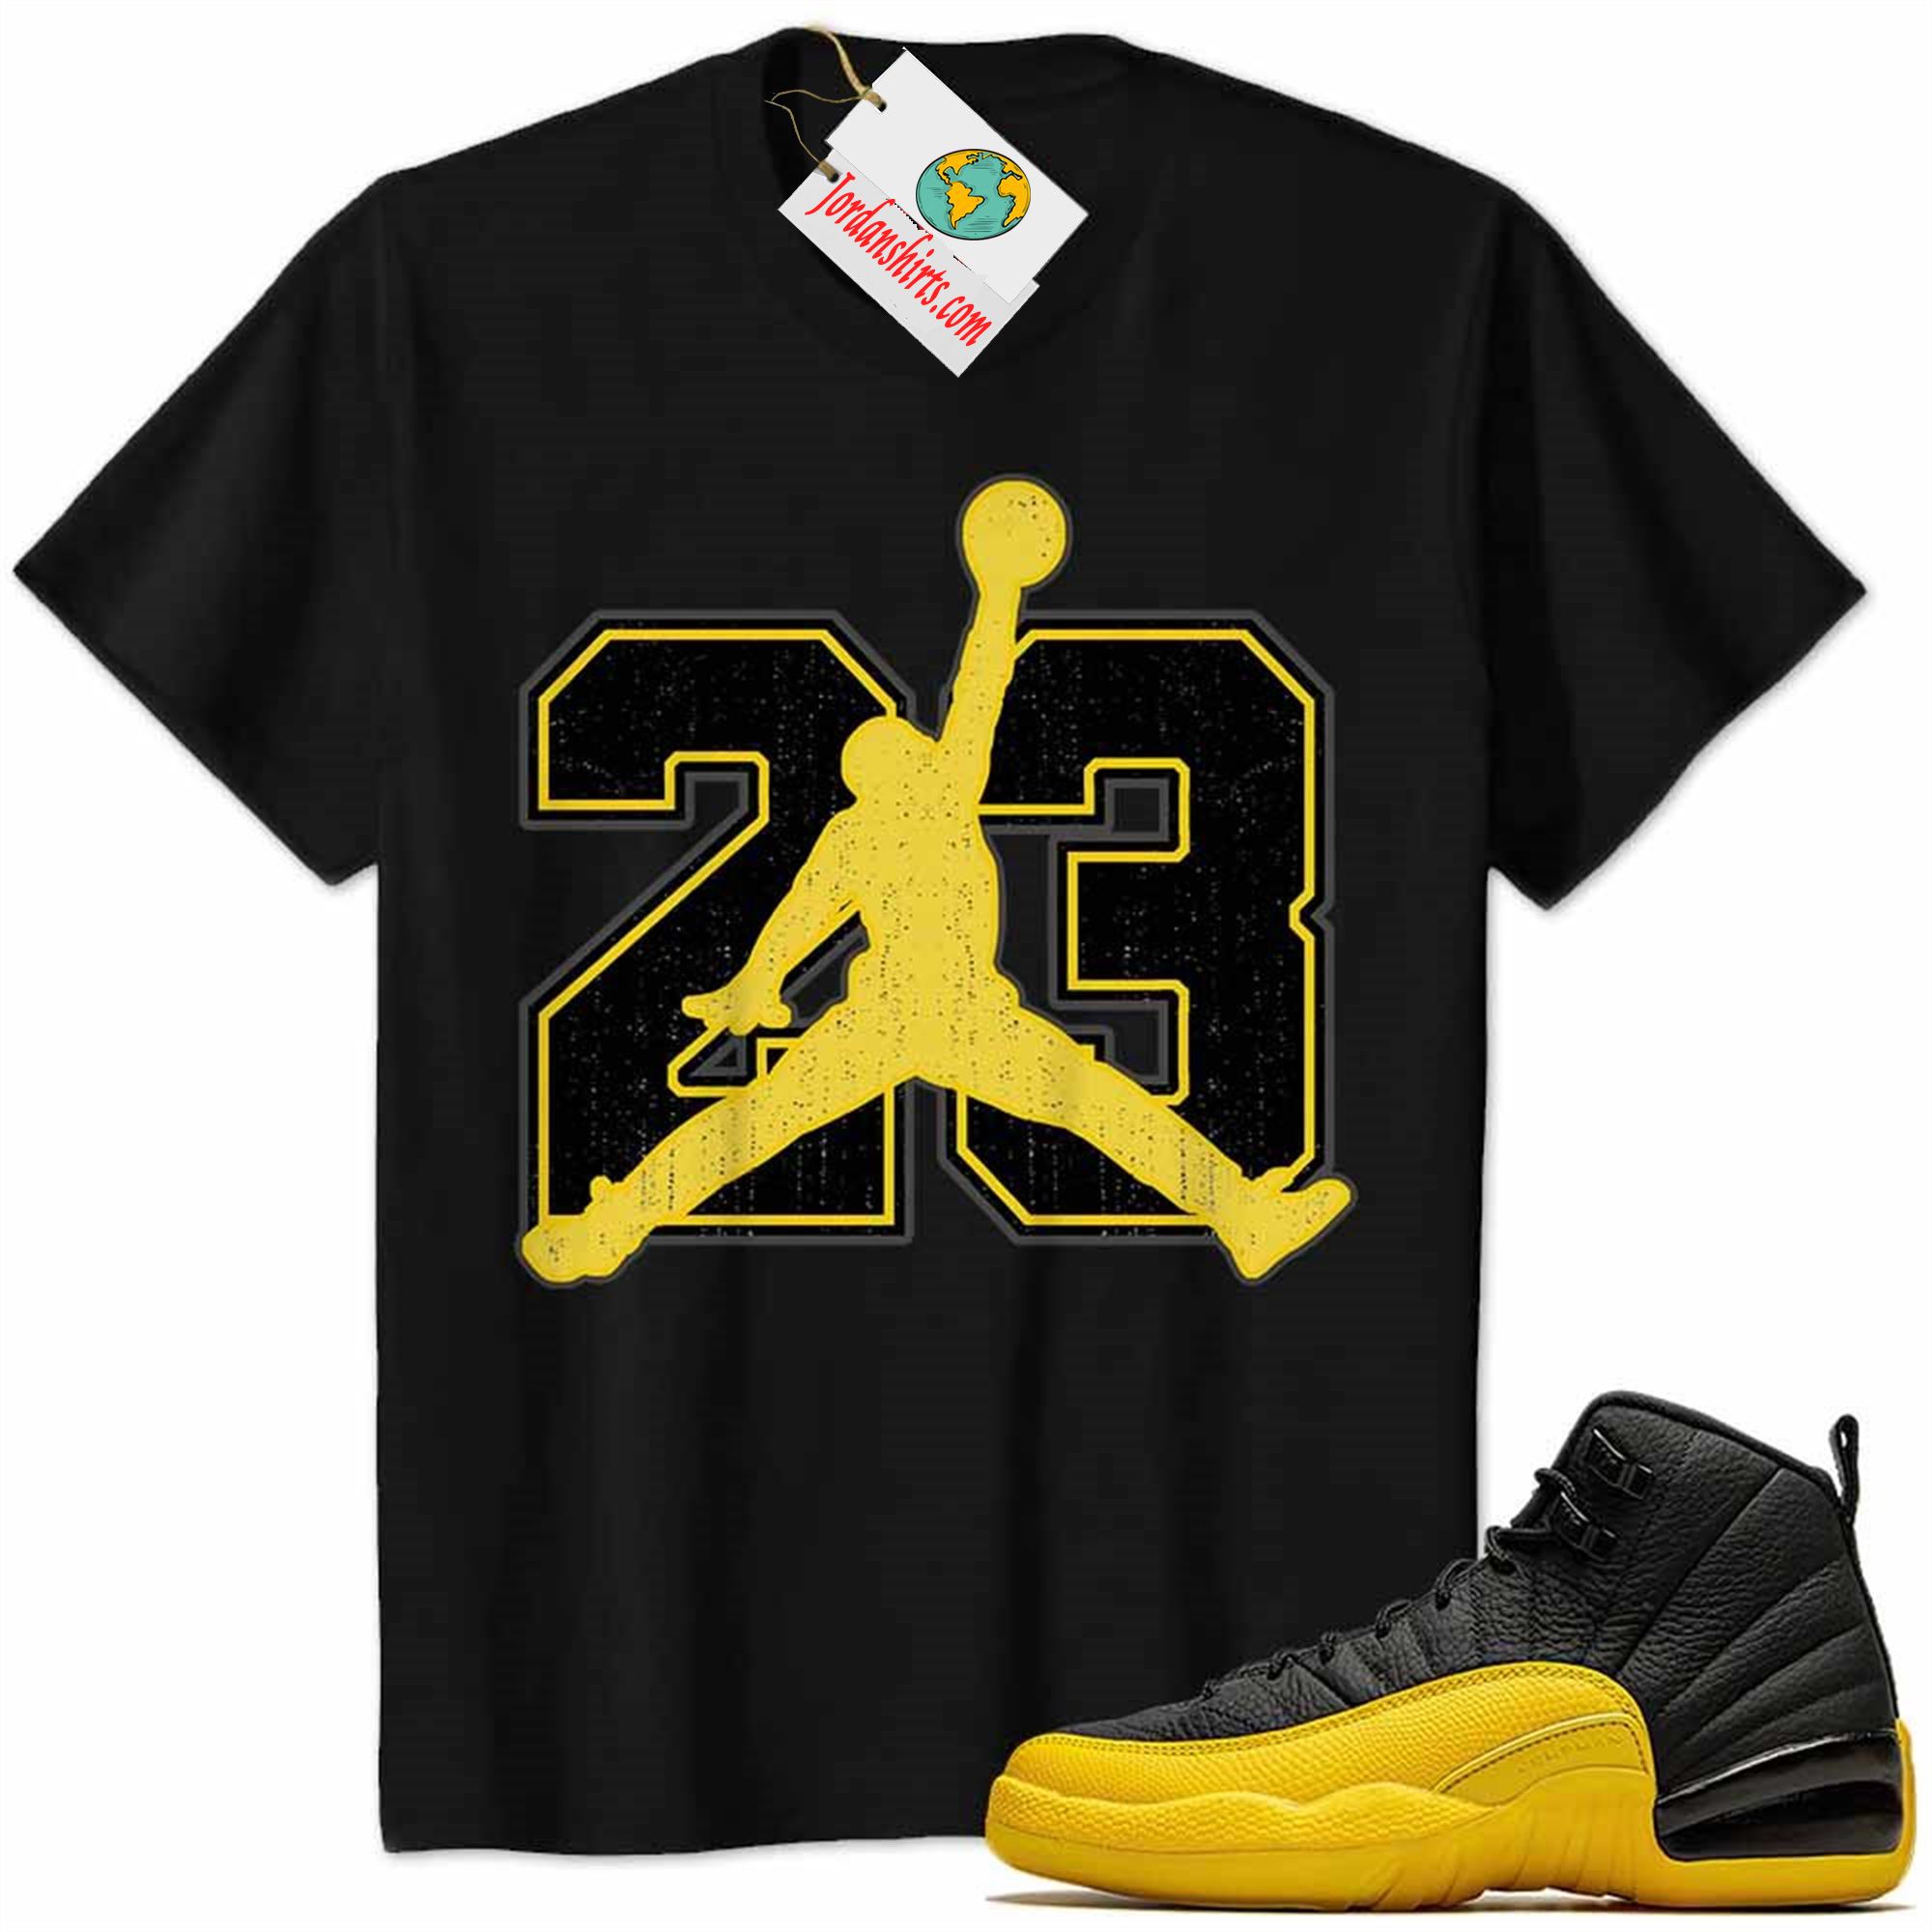 Jordan 12 Shirt, Jordan 12 University Gold Shirt Jumpman No23 Black Full Size Up To 5xl